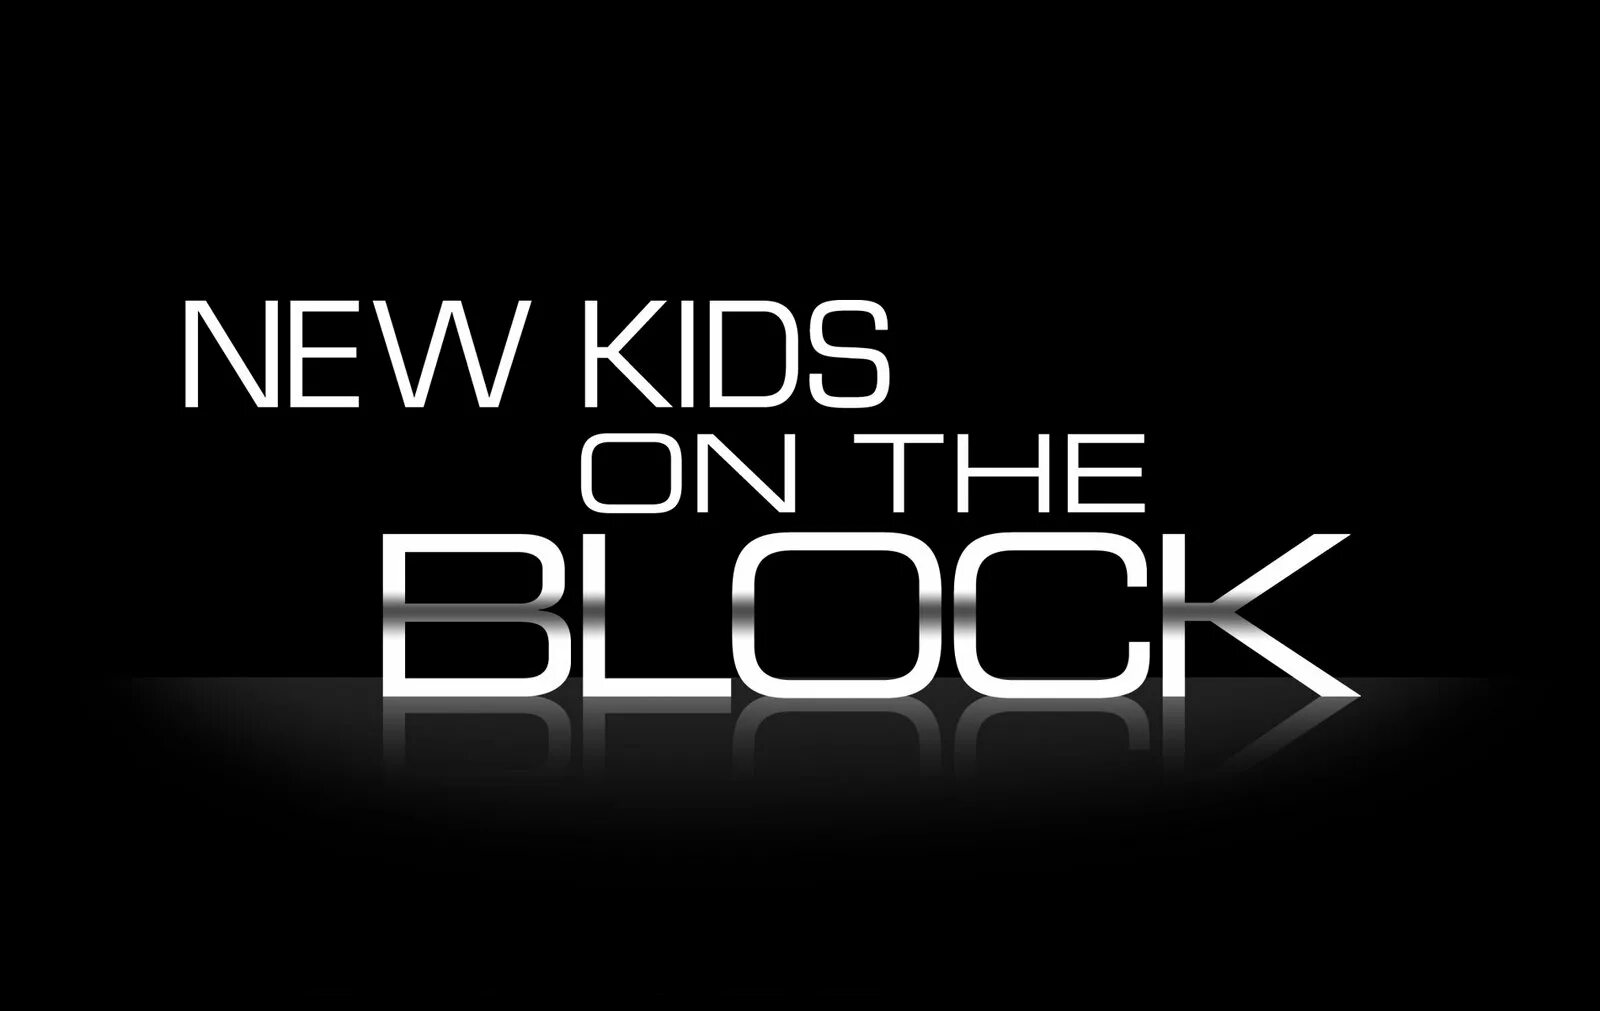 Новой кид. New kind on the Block лого. Big Block логотипы. The New Kid on the Block book. New Kids on the Block.